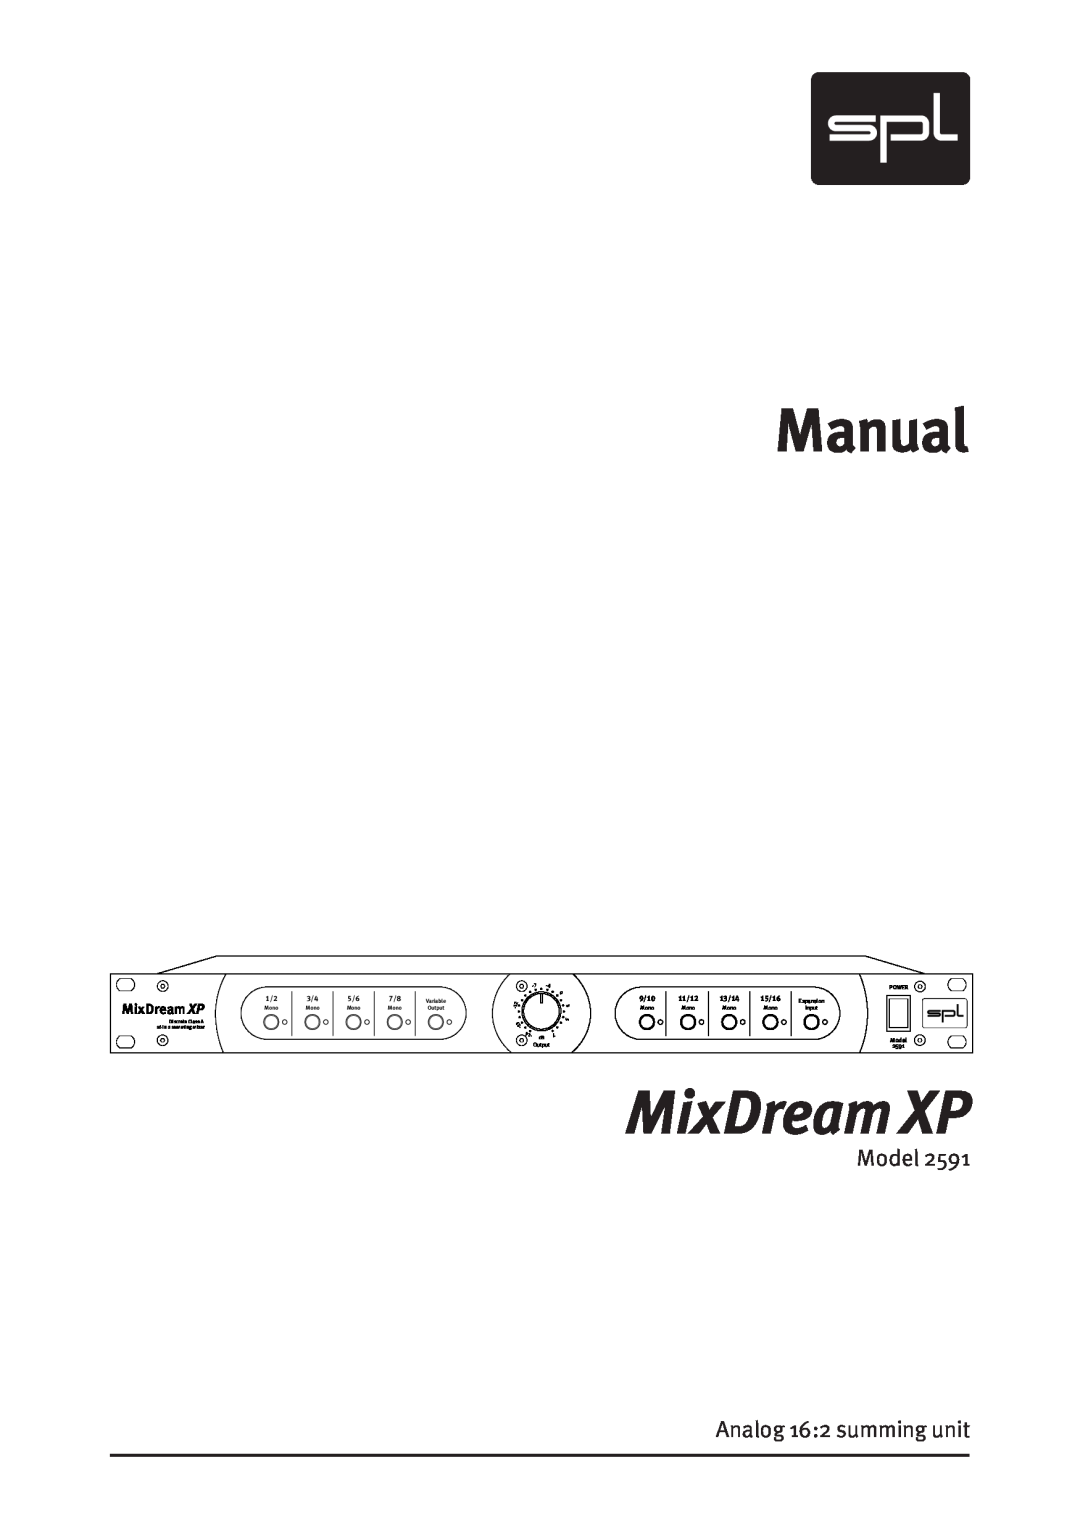 Sound Performance Lab Model 2591 manual Manual, MixDream XP, 9/10, 11/12, 13/14, 15/16 